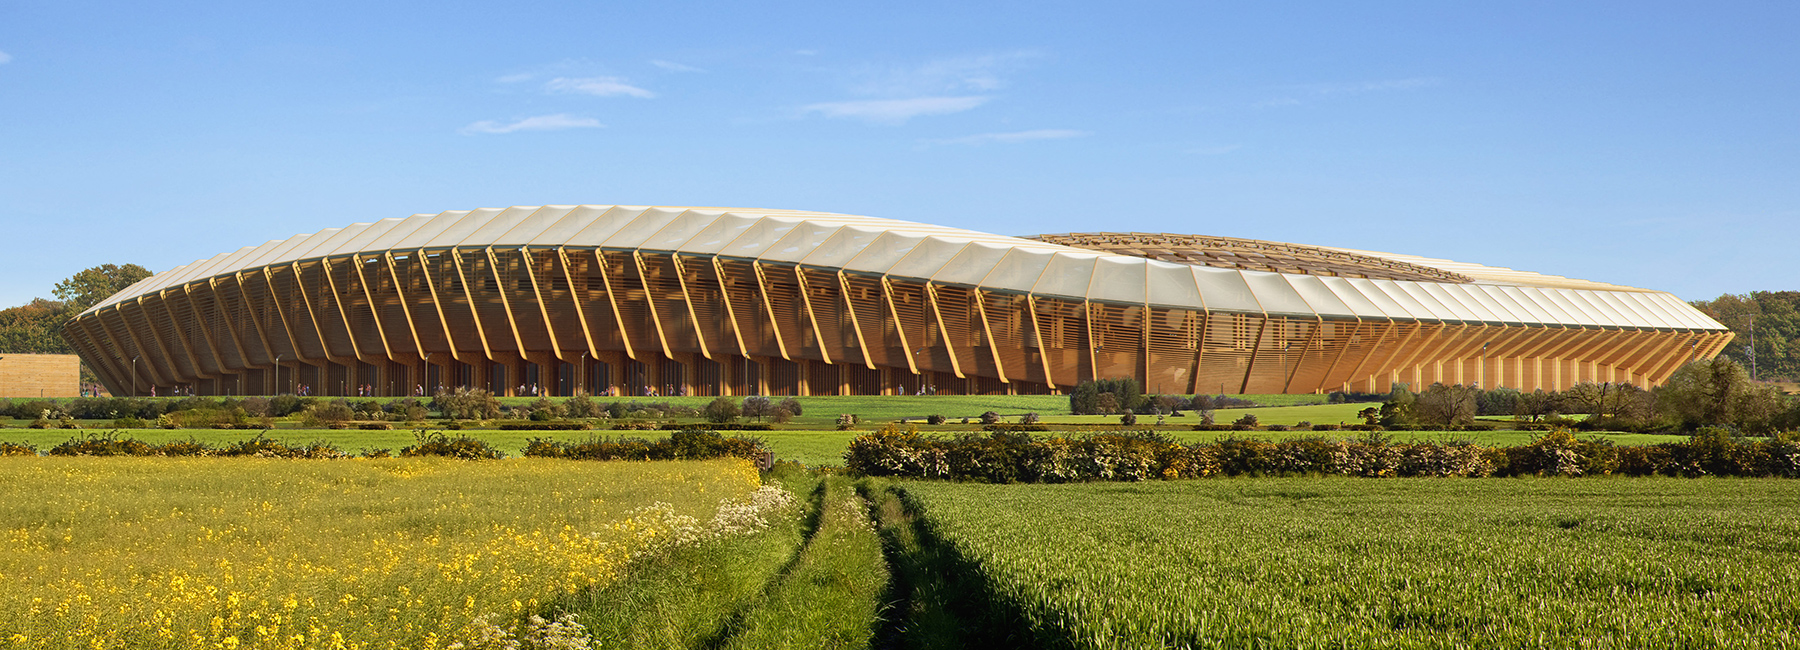 zaha-hadid-architects-forest-green-rovers-eco-park-stadium-designboom-1800X.jpg